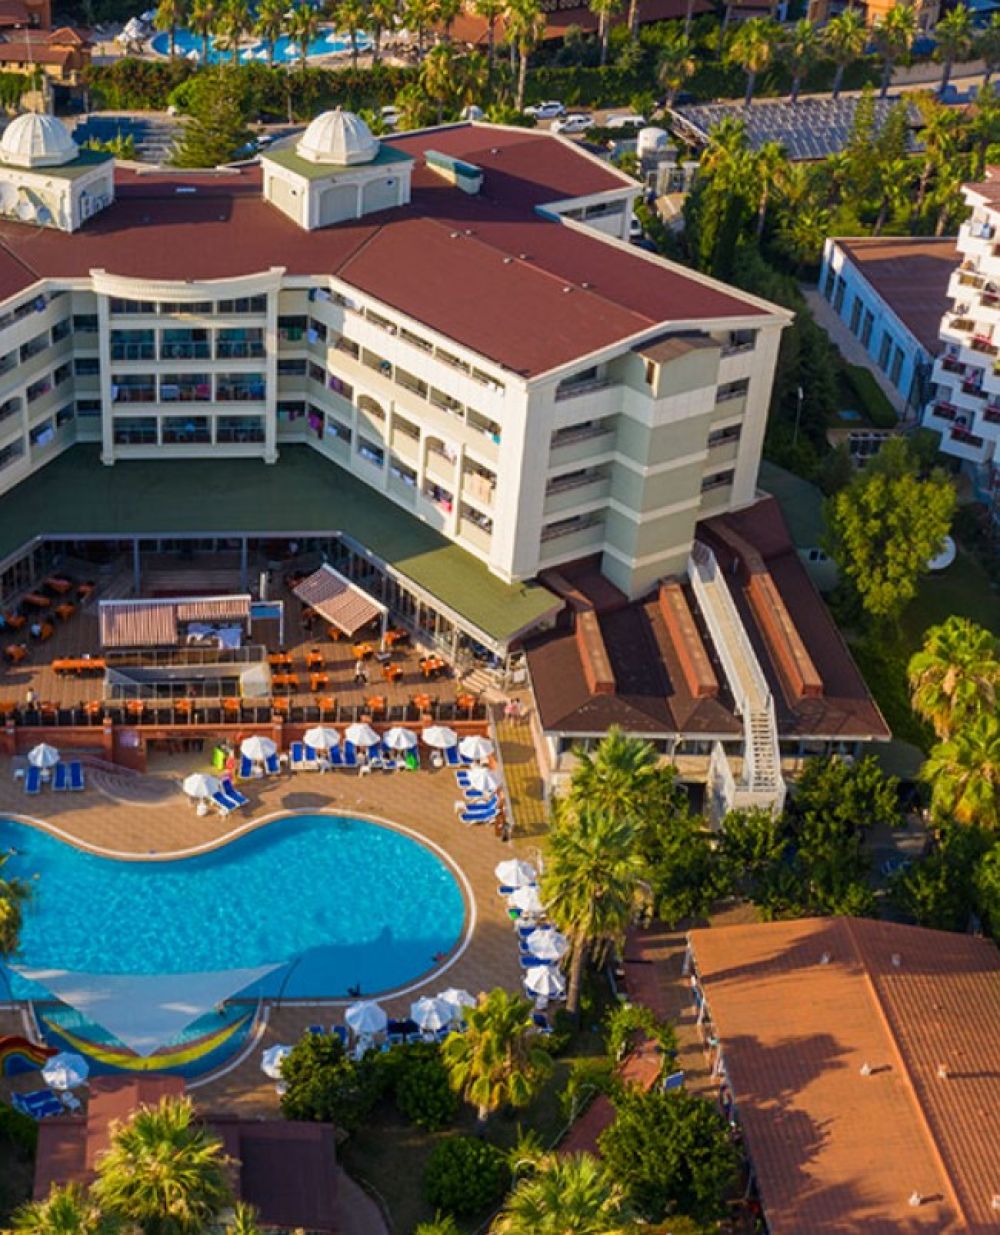 Seher Kumkoy Star Resort & Spa 4*